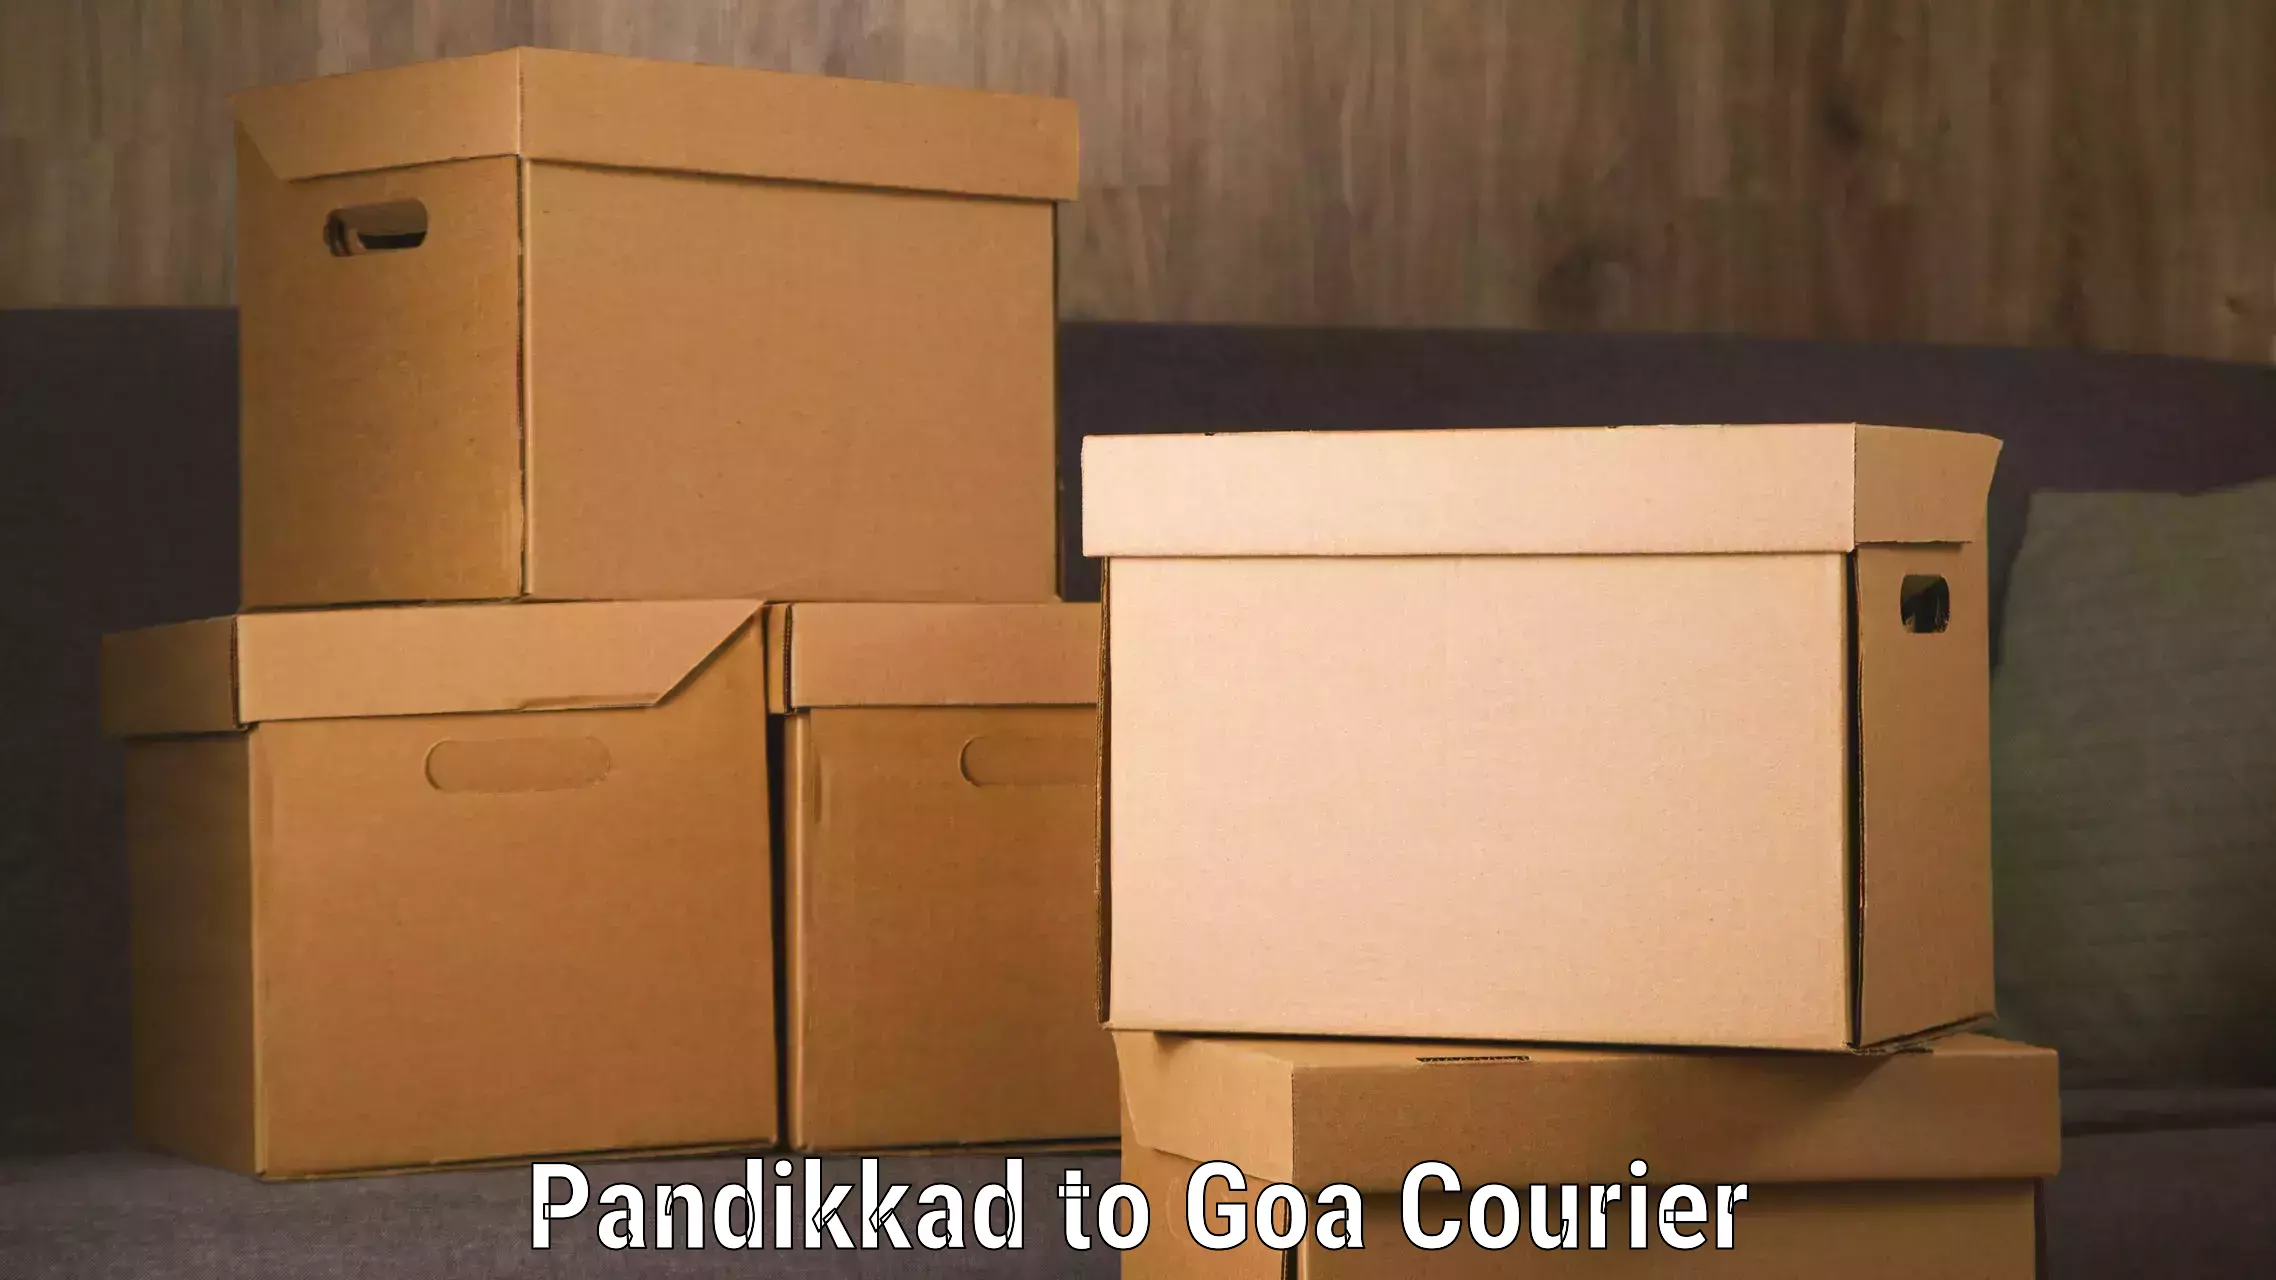 Global logistics network Pandikkad to Goa